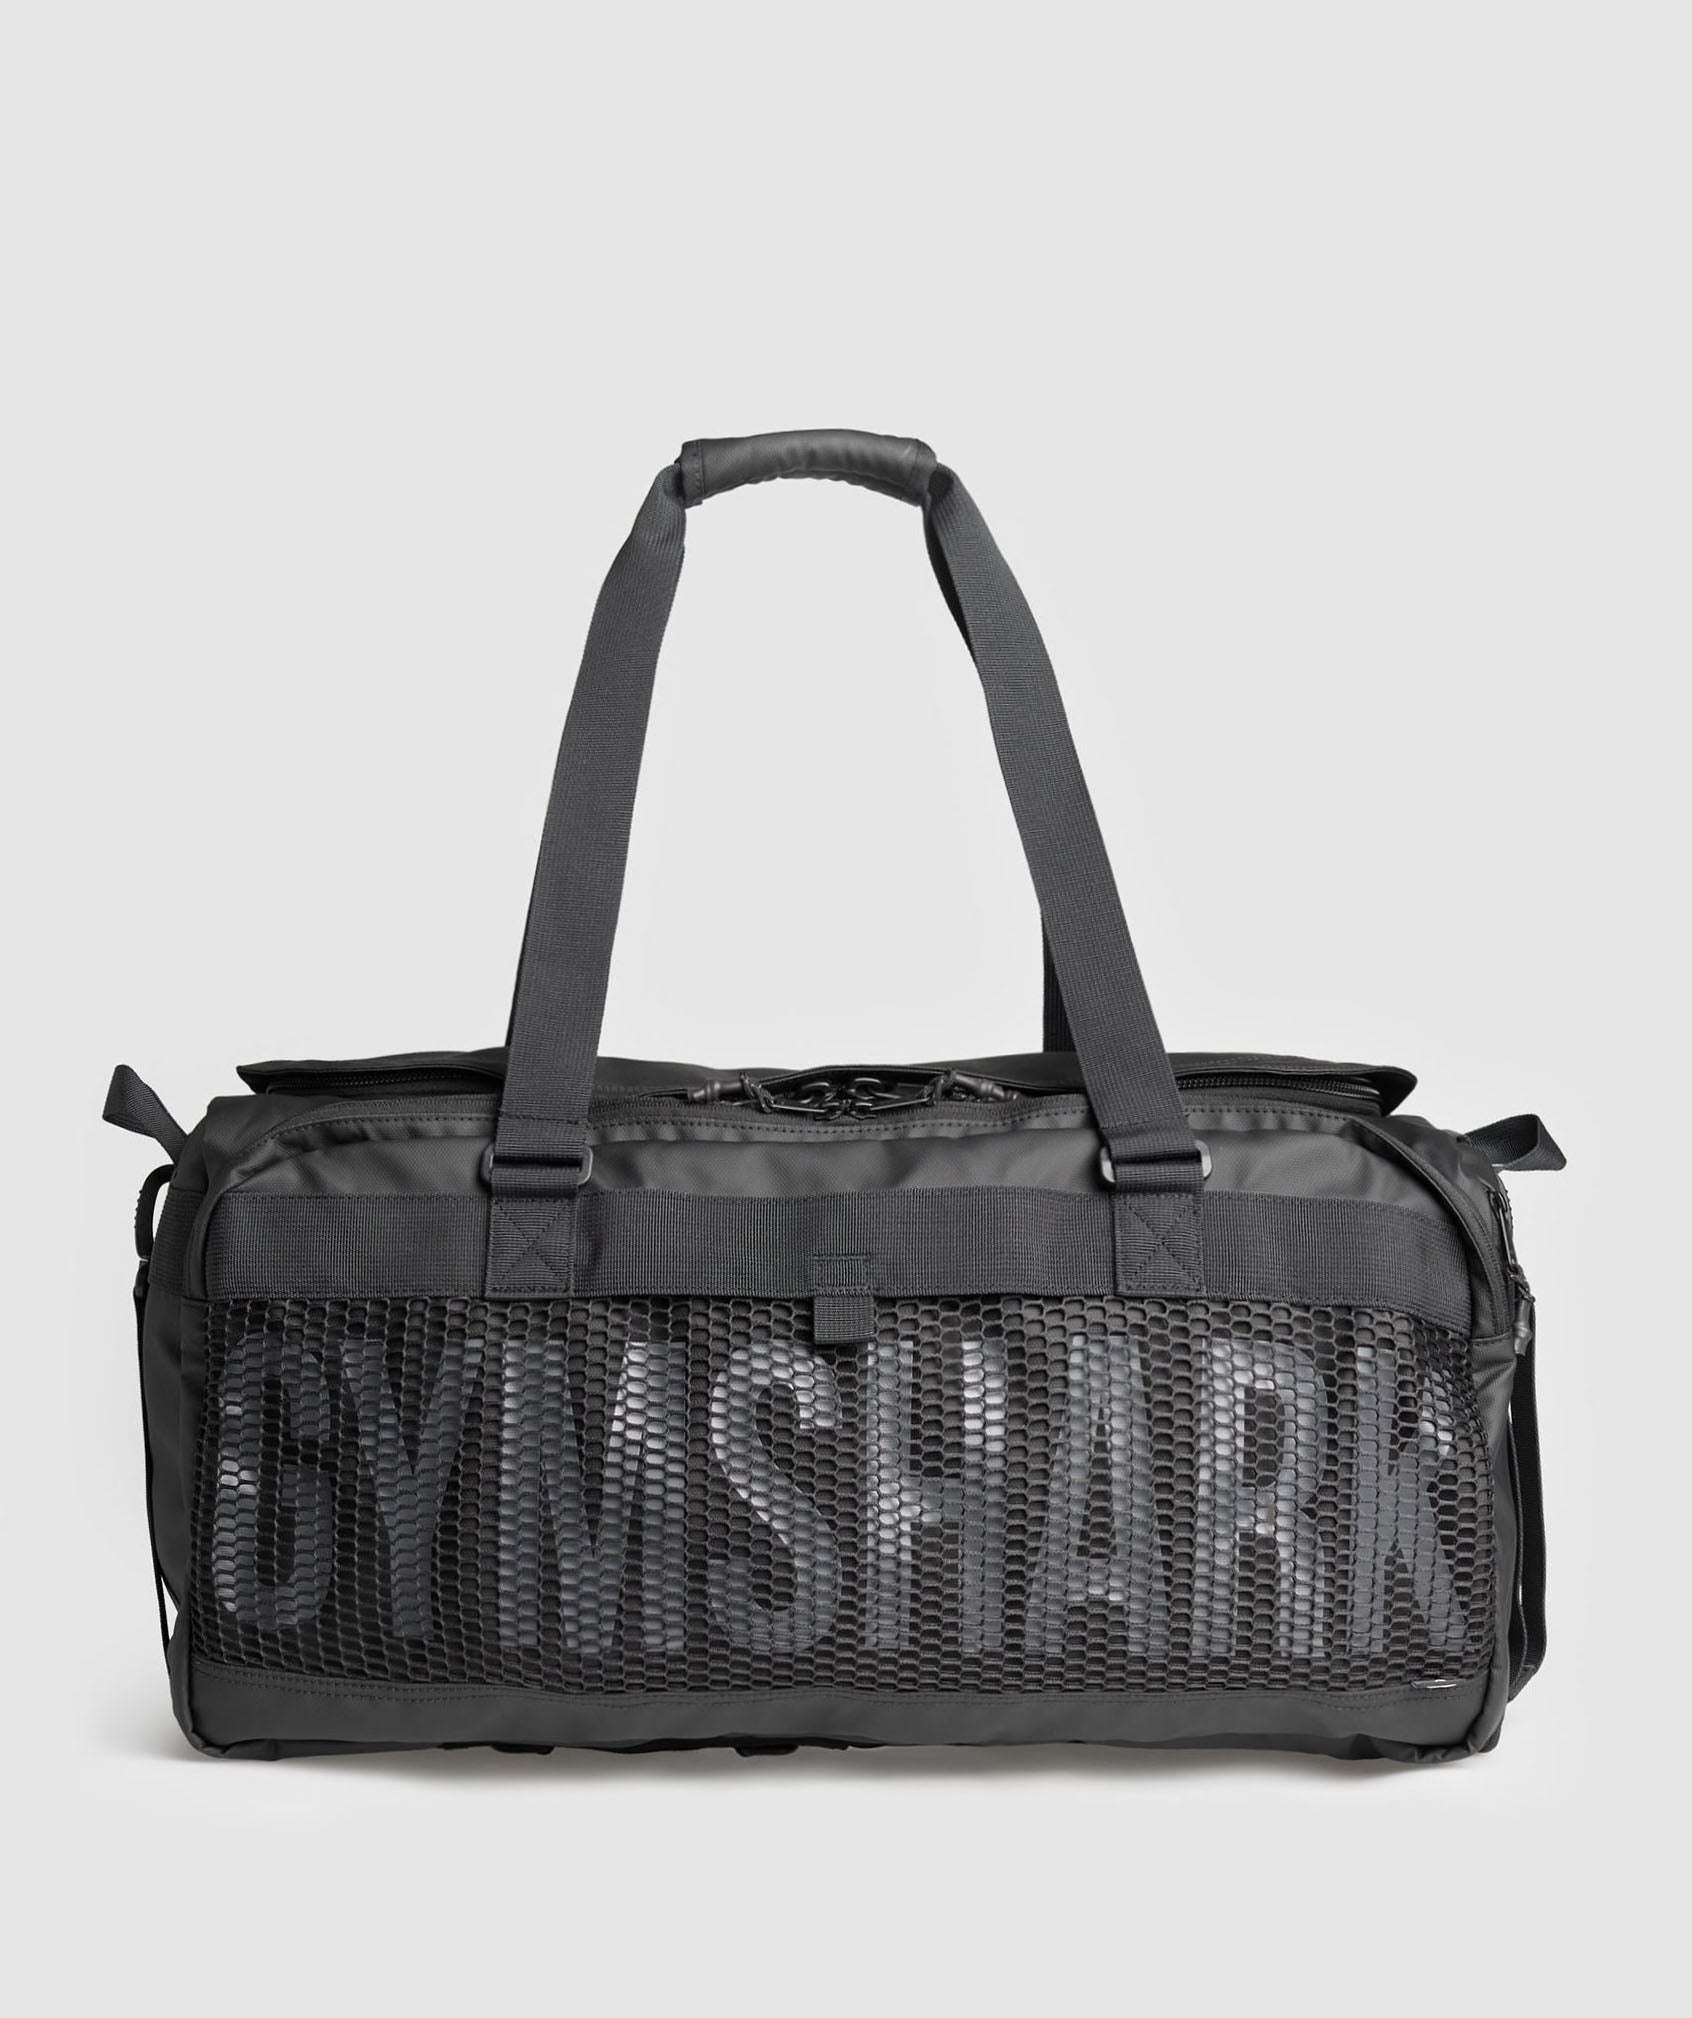 Gym Duffel Bags - Men's & Women's Duffel Bags from Gymshark